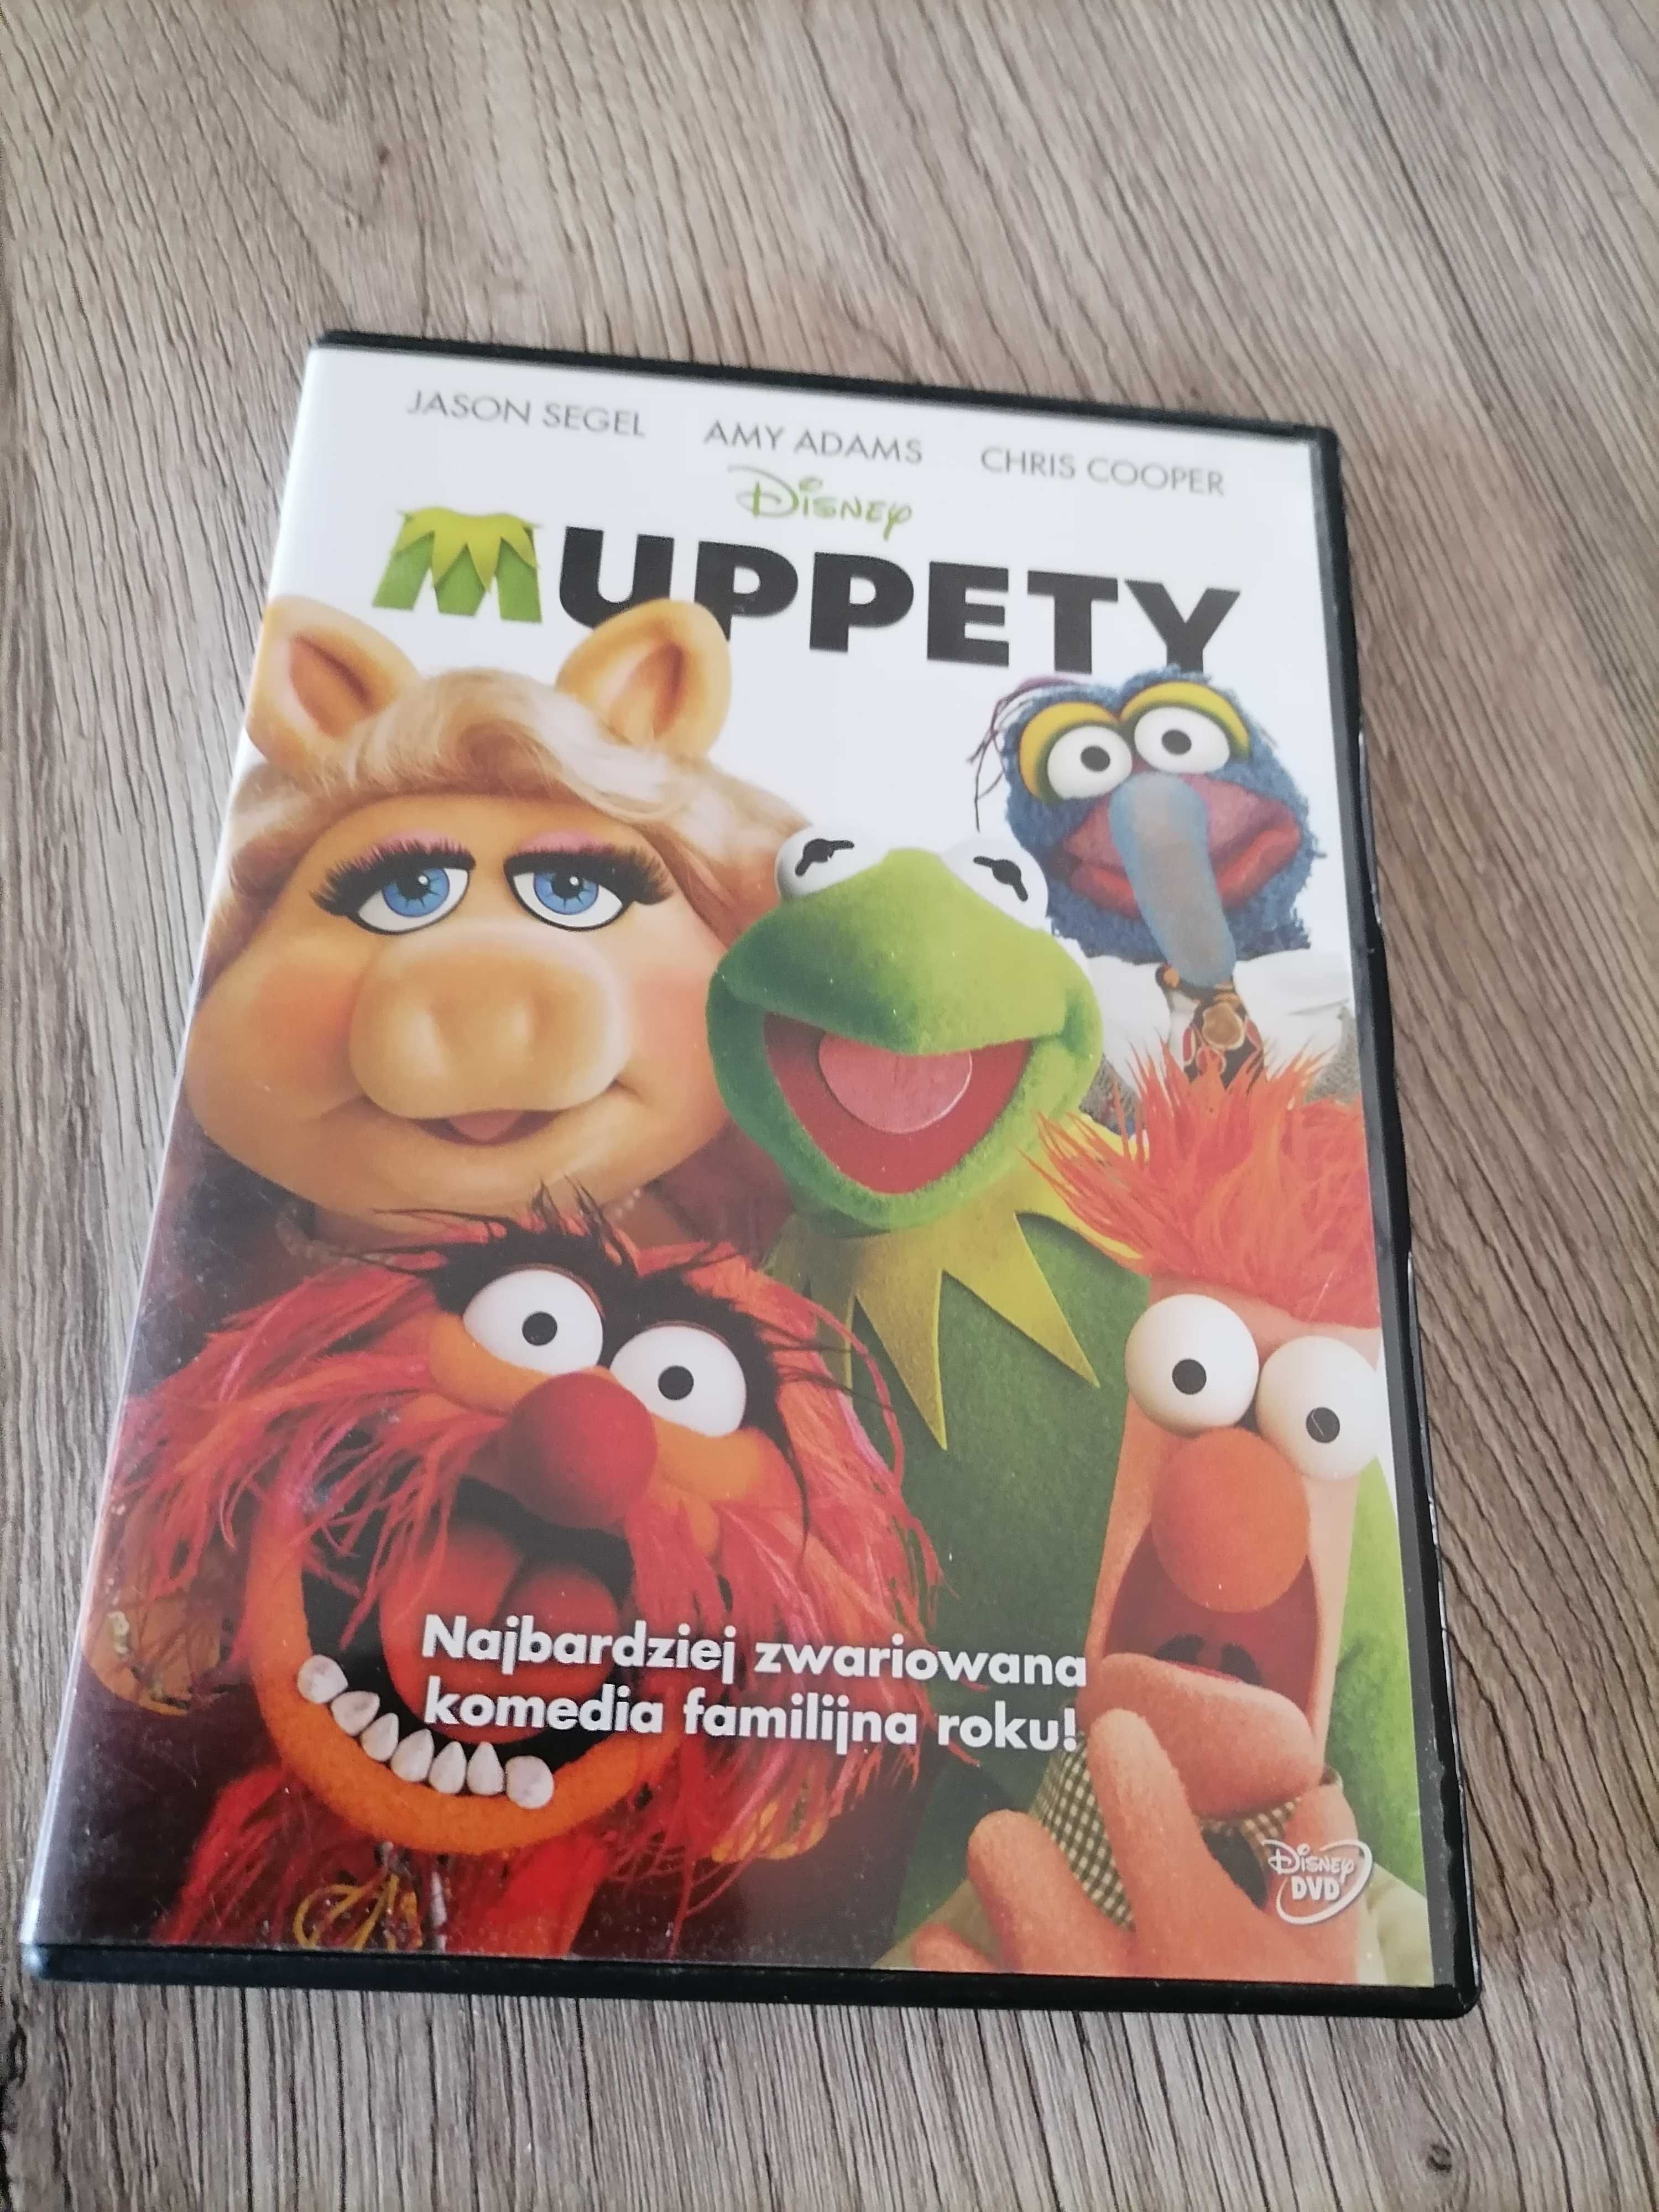 Muppety - DVD okazja